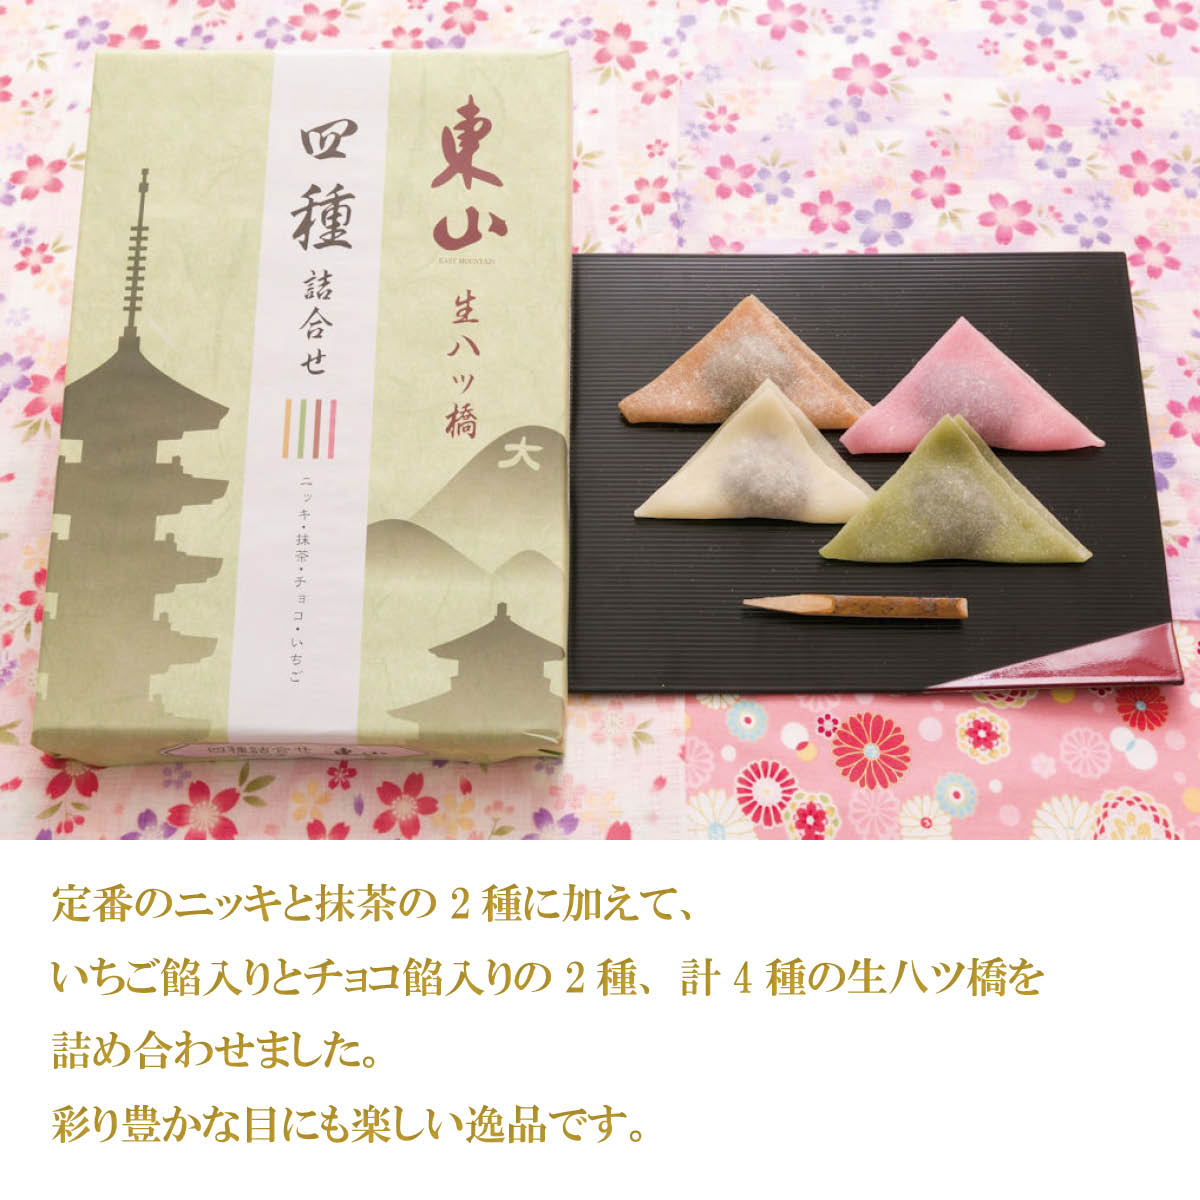  raw yatsuhashi 4 kind assortment (niki* powdered green tea * chocolate .* strawberry .) Kyoto higashi mountain yatsuhashi head office 